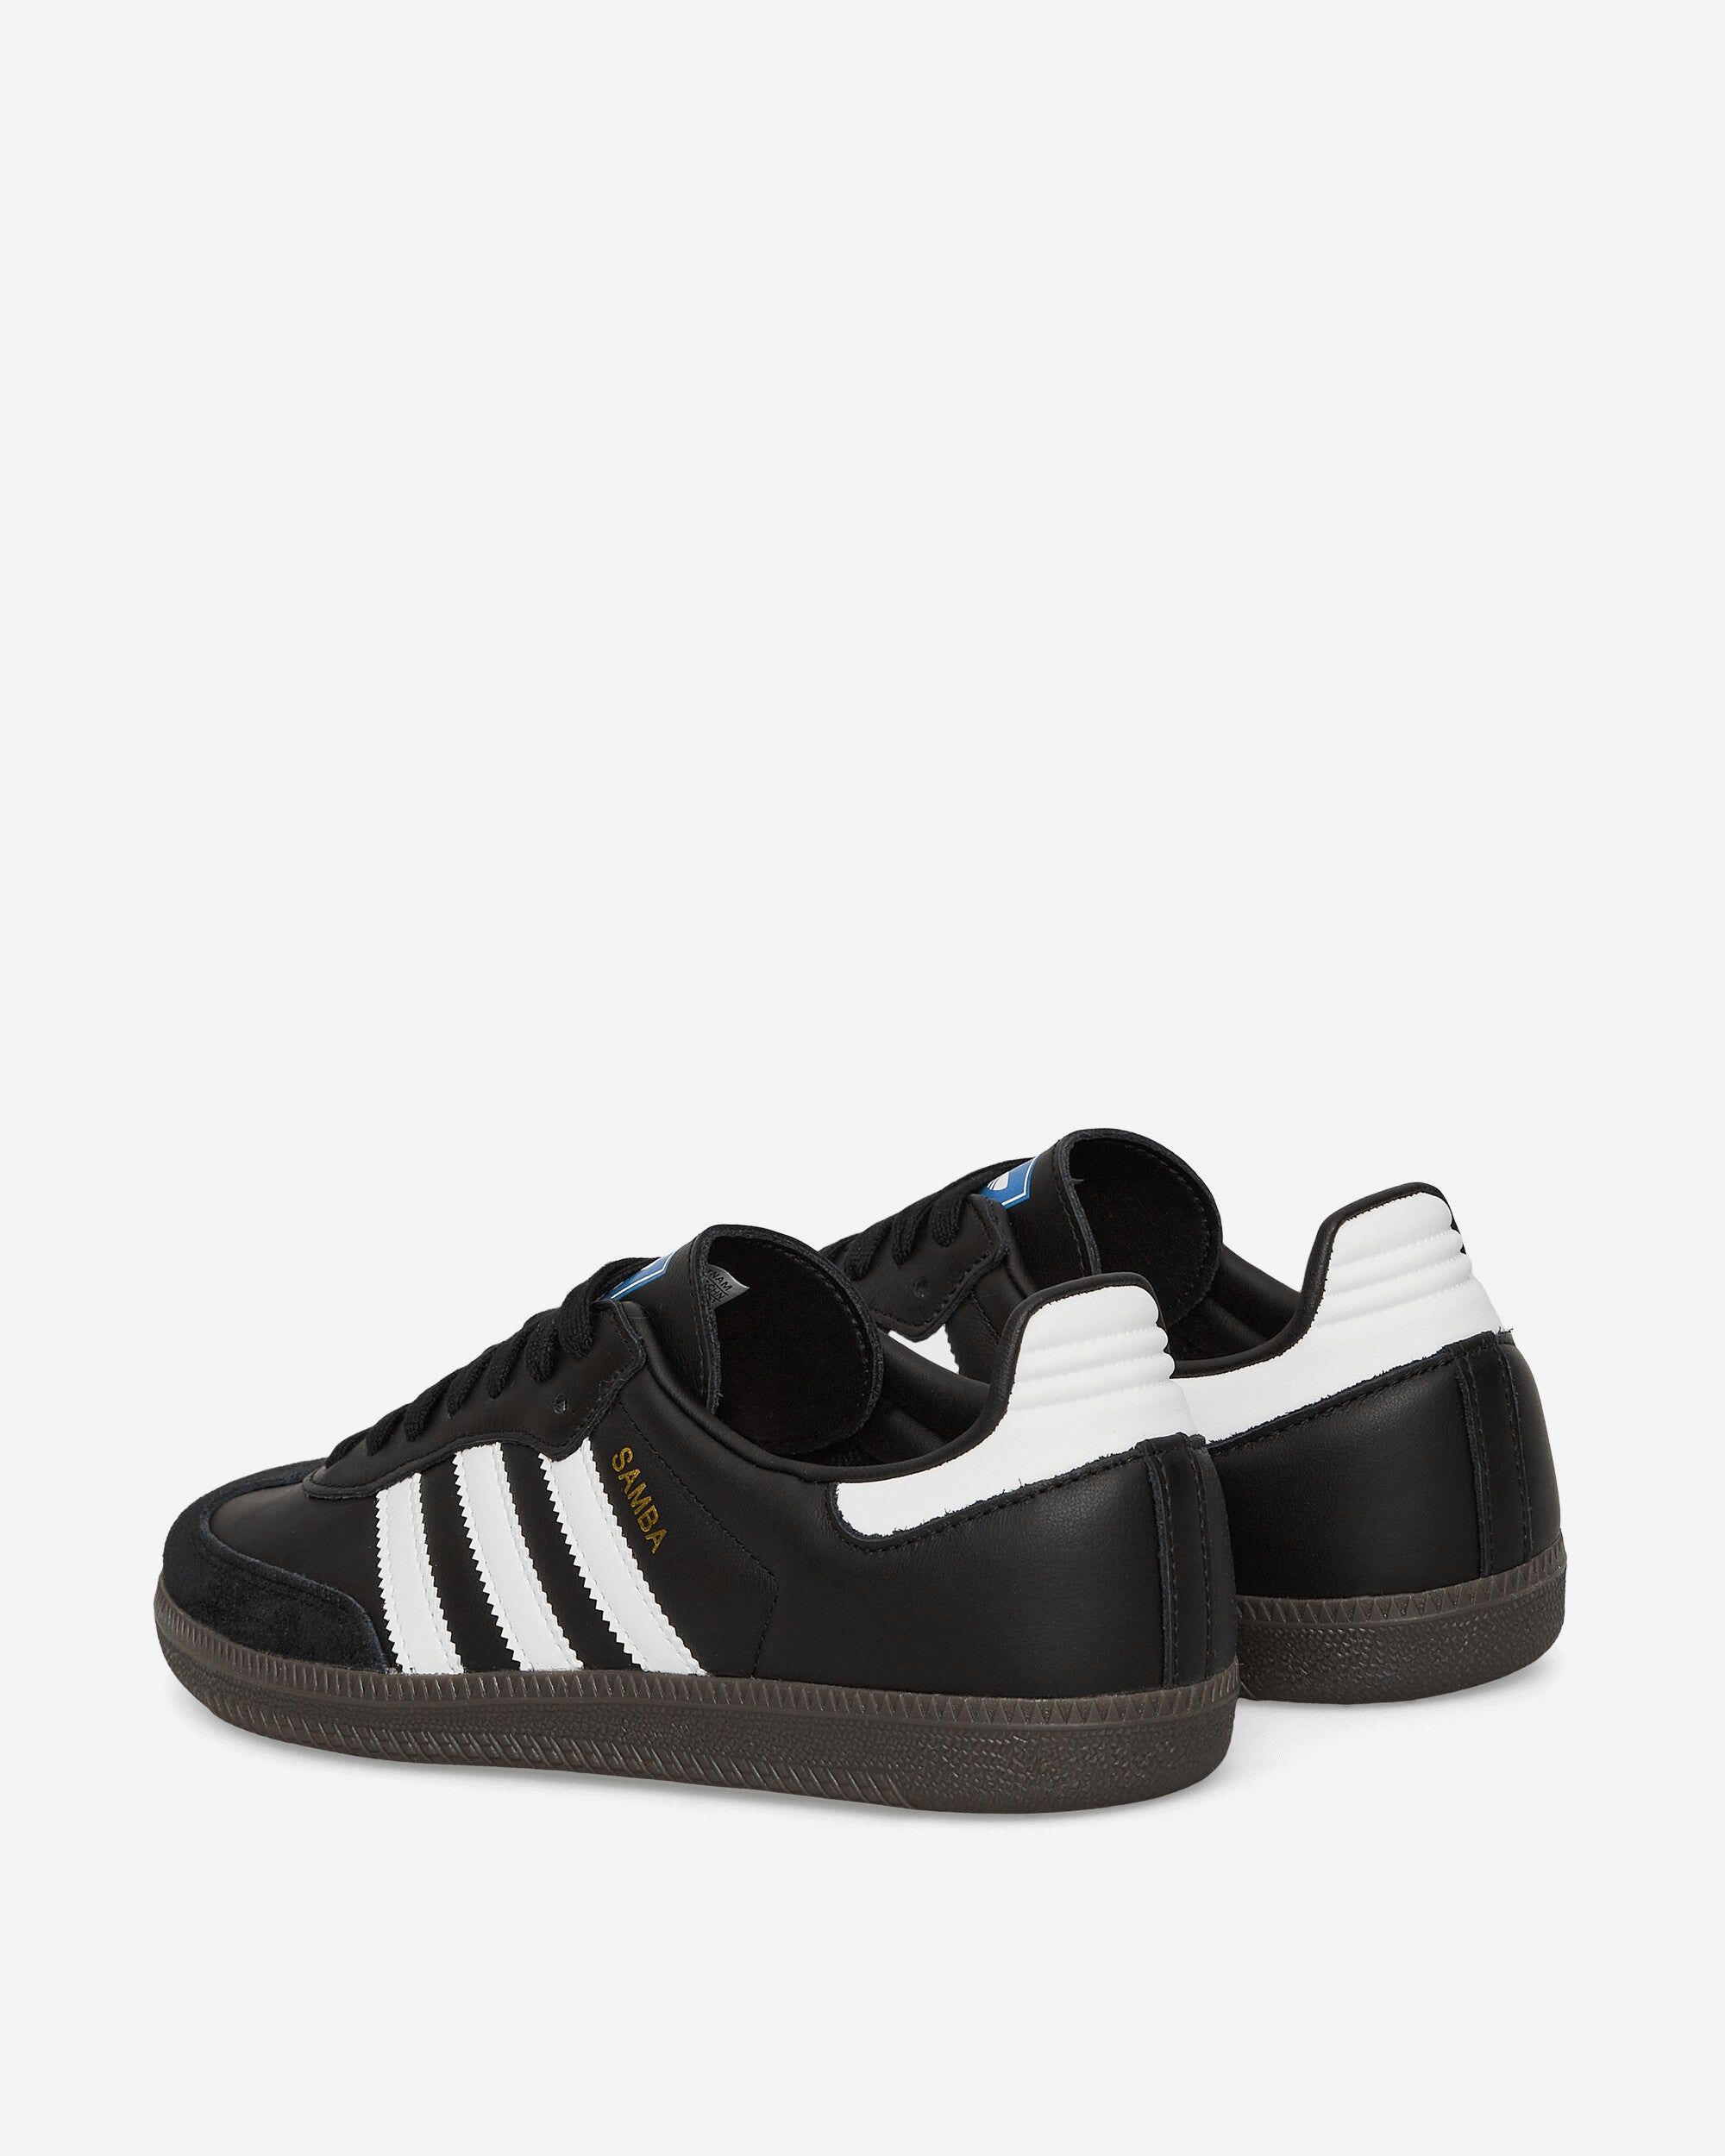 adidas Samba Og Core Black/Ftwr White Sneakers Low B75807 001